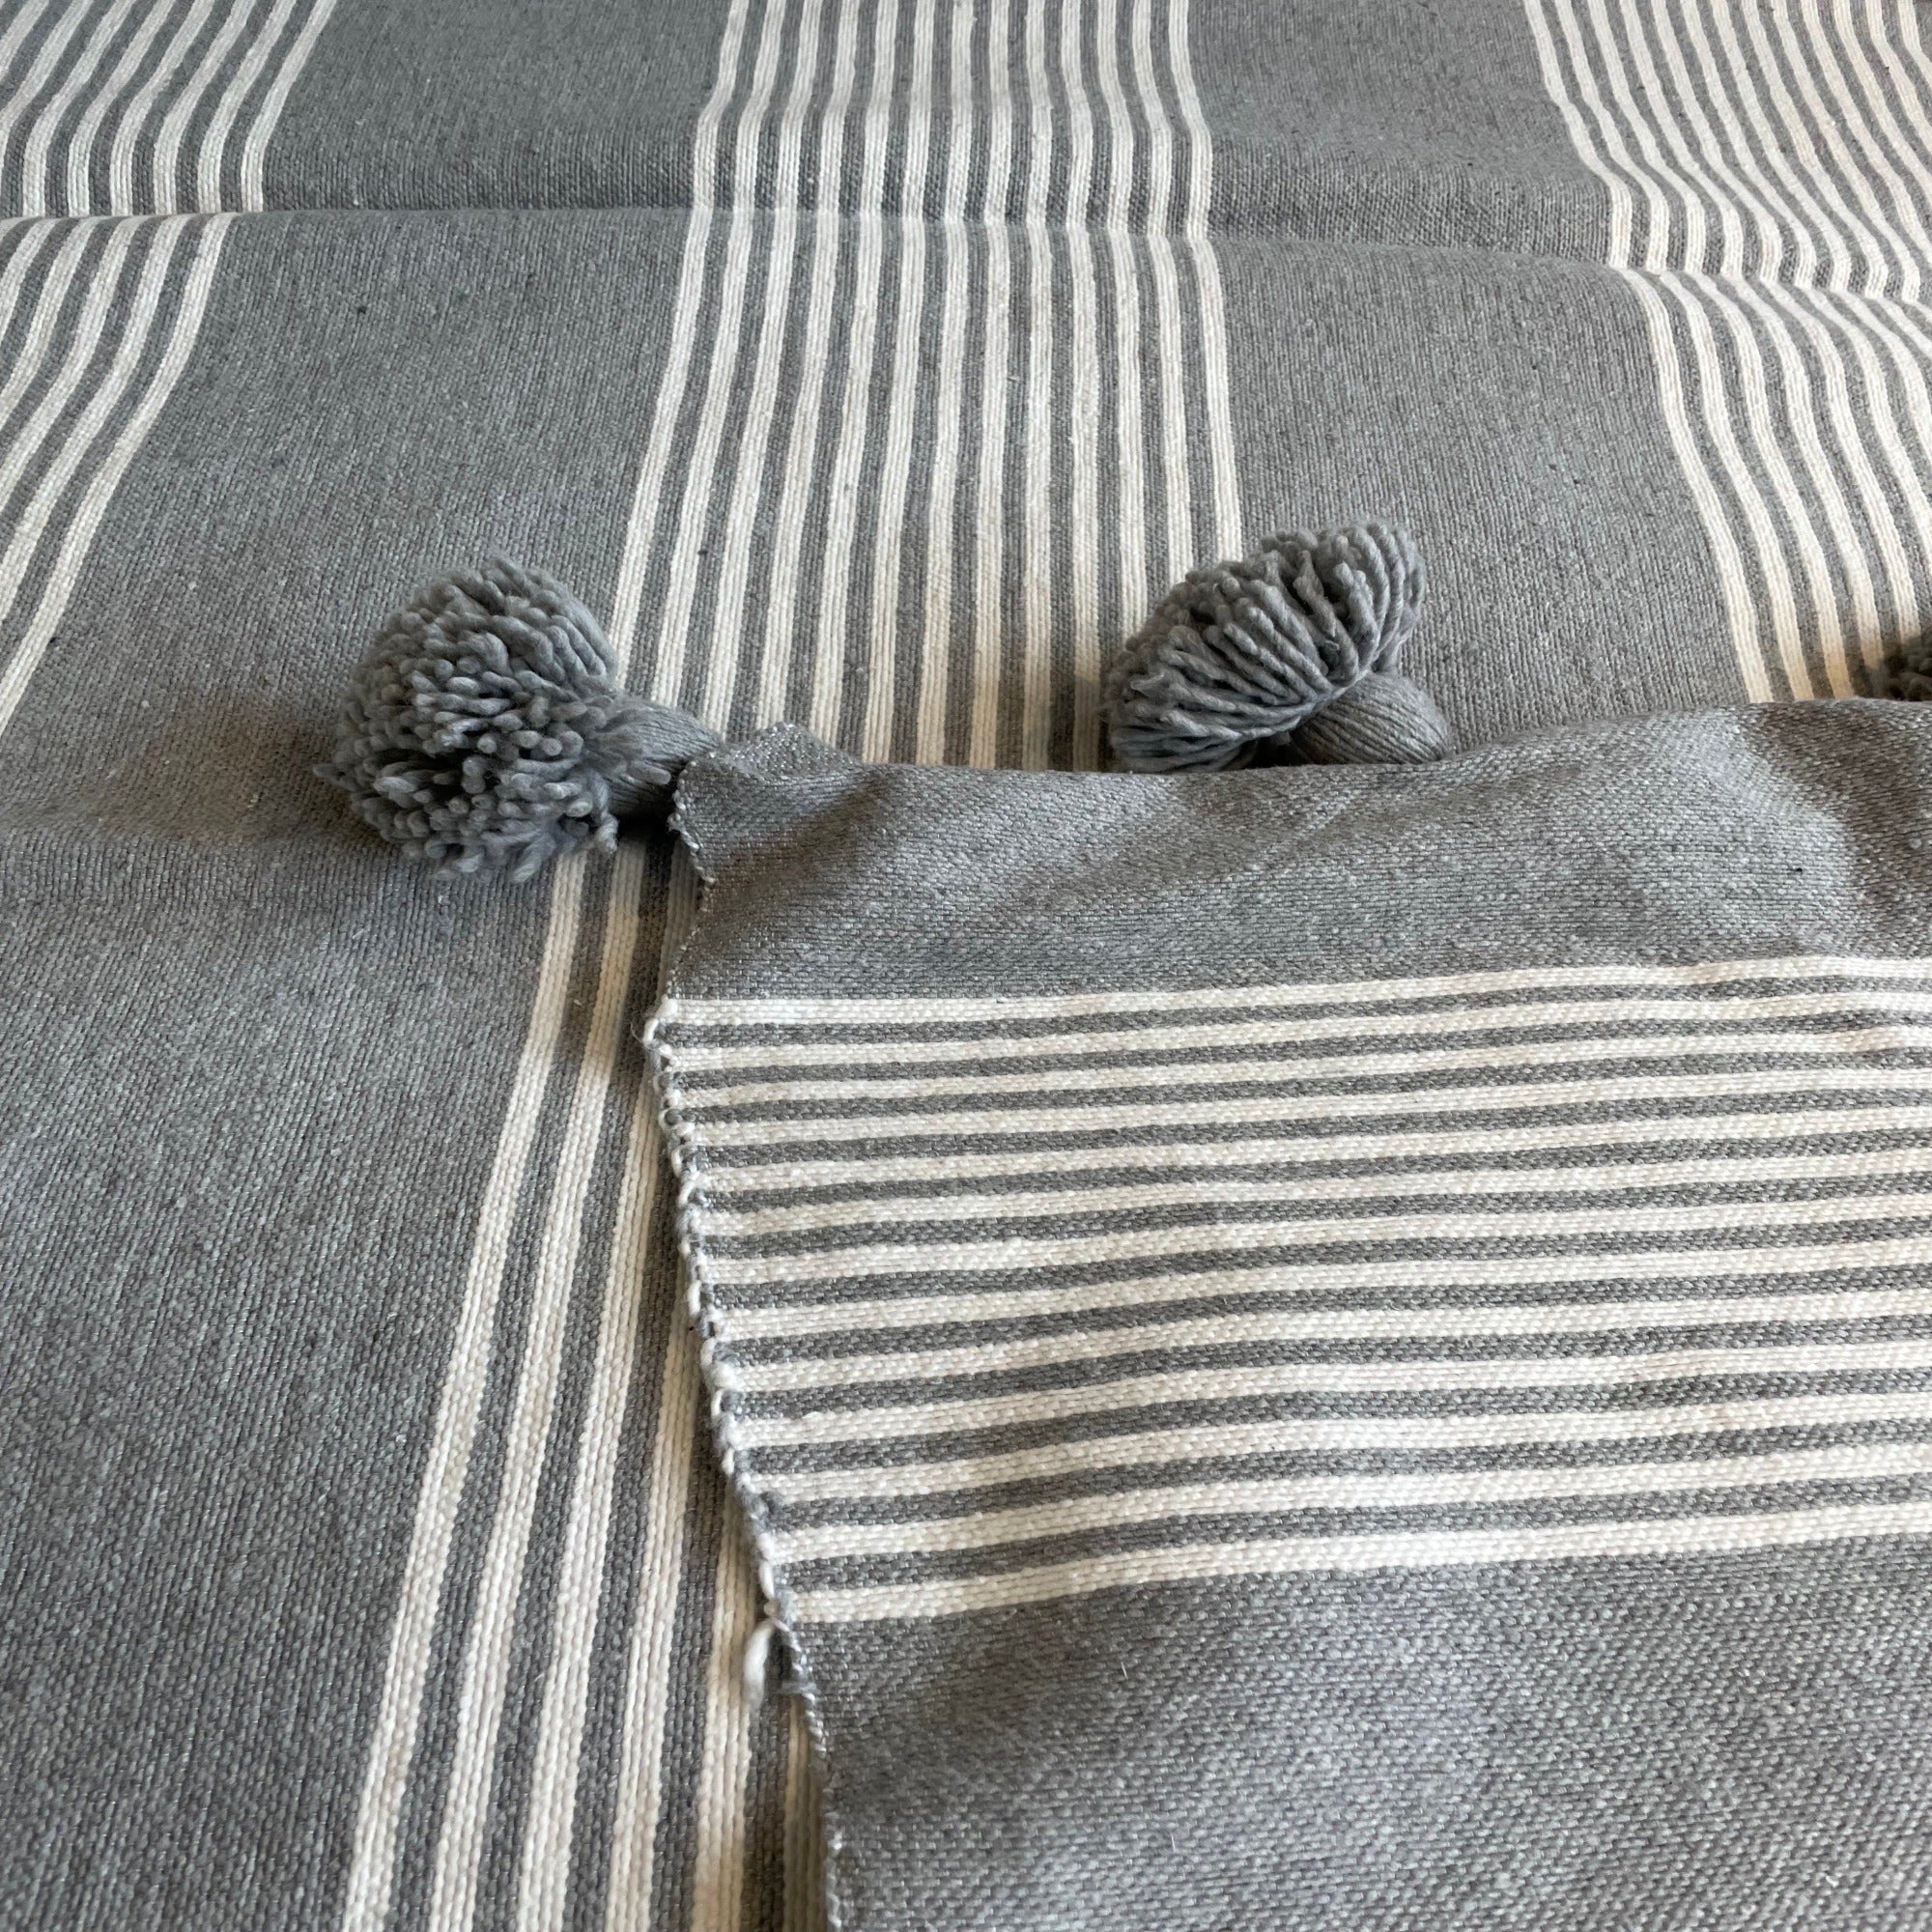 Berber blanket, grey and white